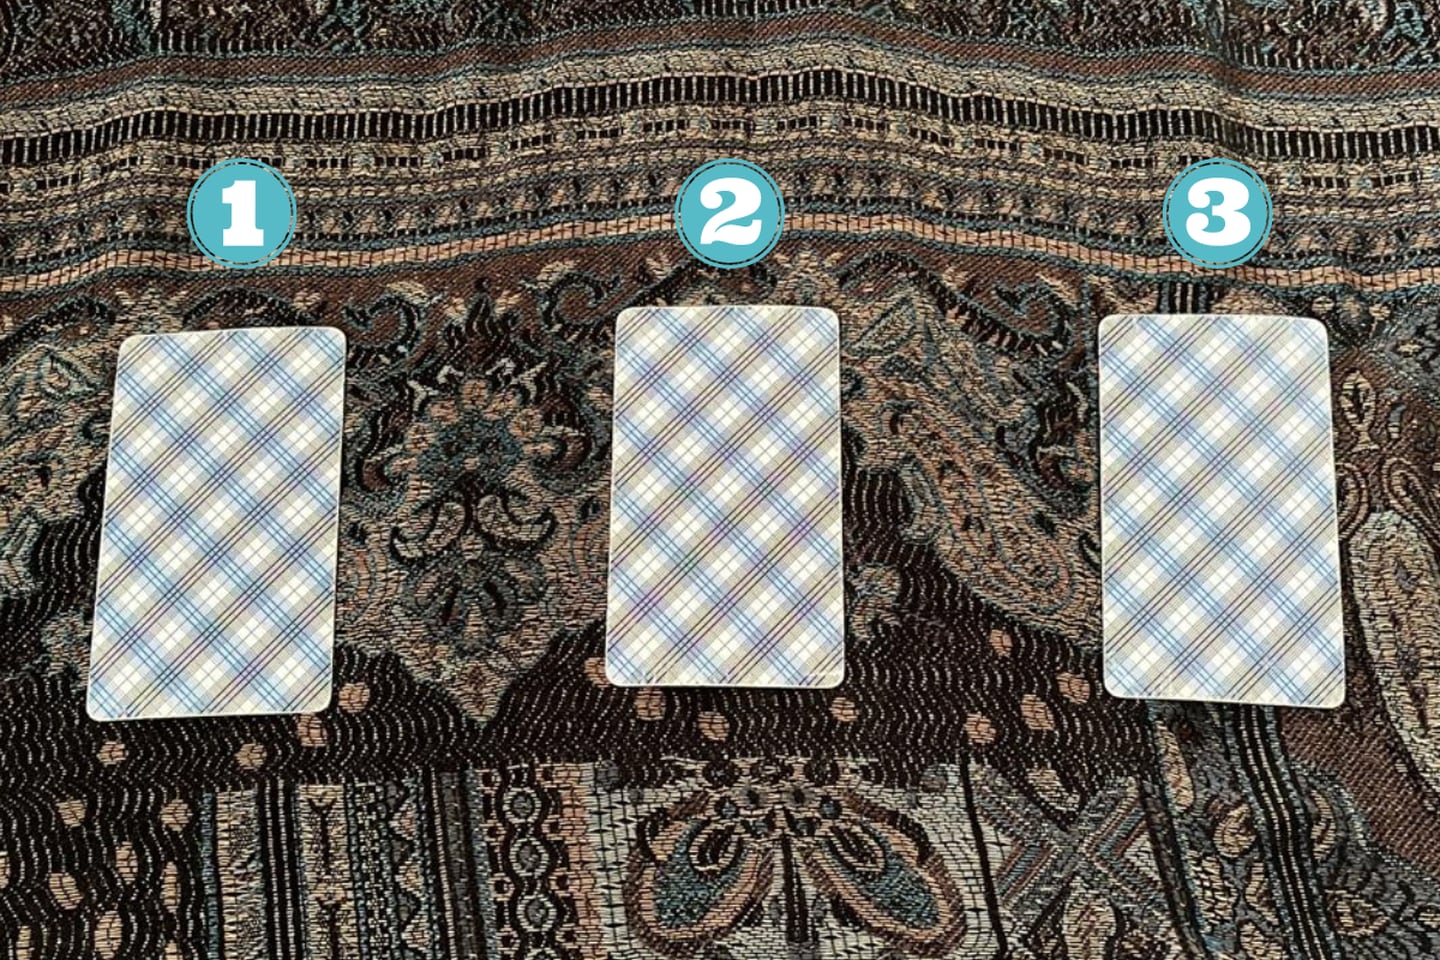 tres cartas del tarot encima de una tela.